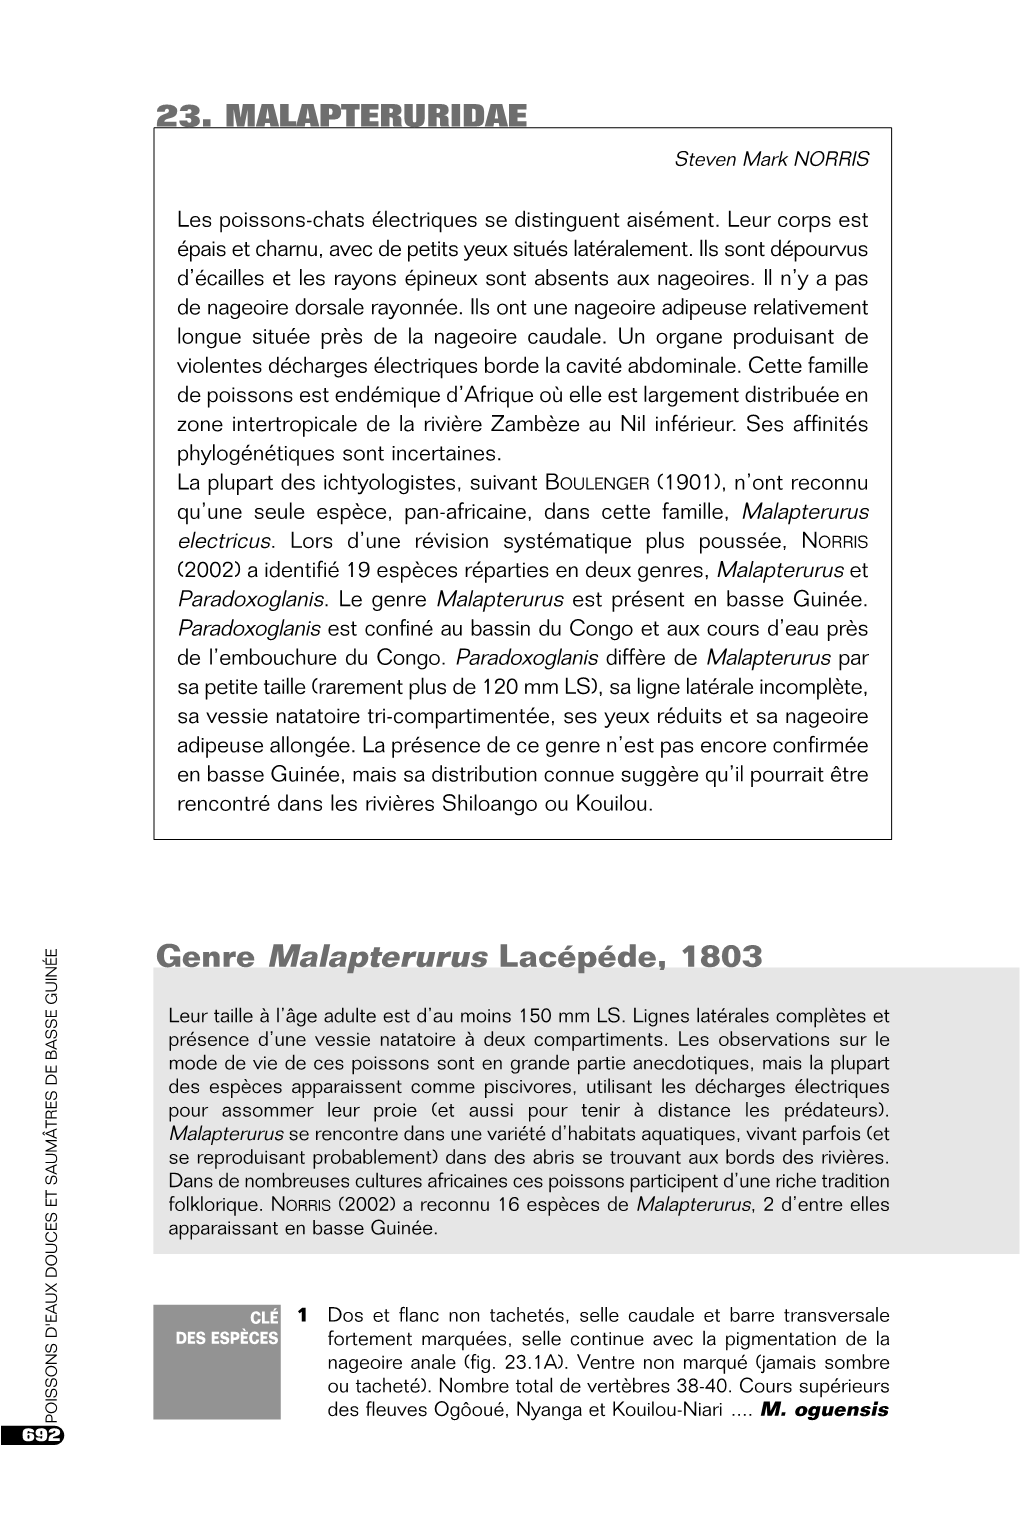 23. MALAPTERURIDAE Genre Malapterurus Lacépéde, 1803